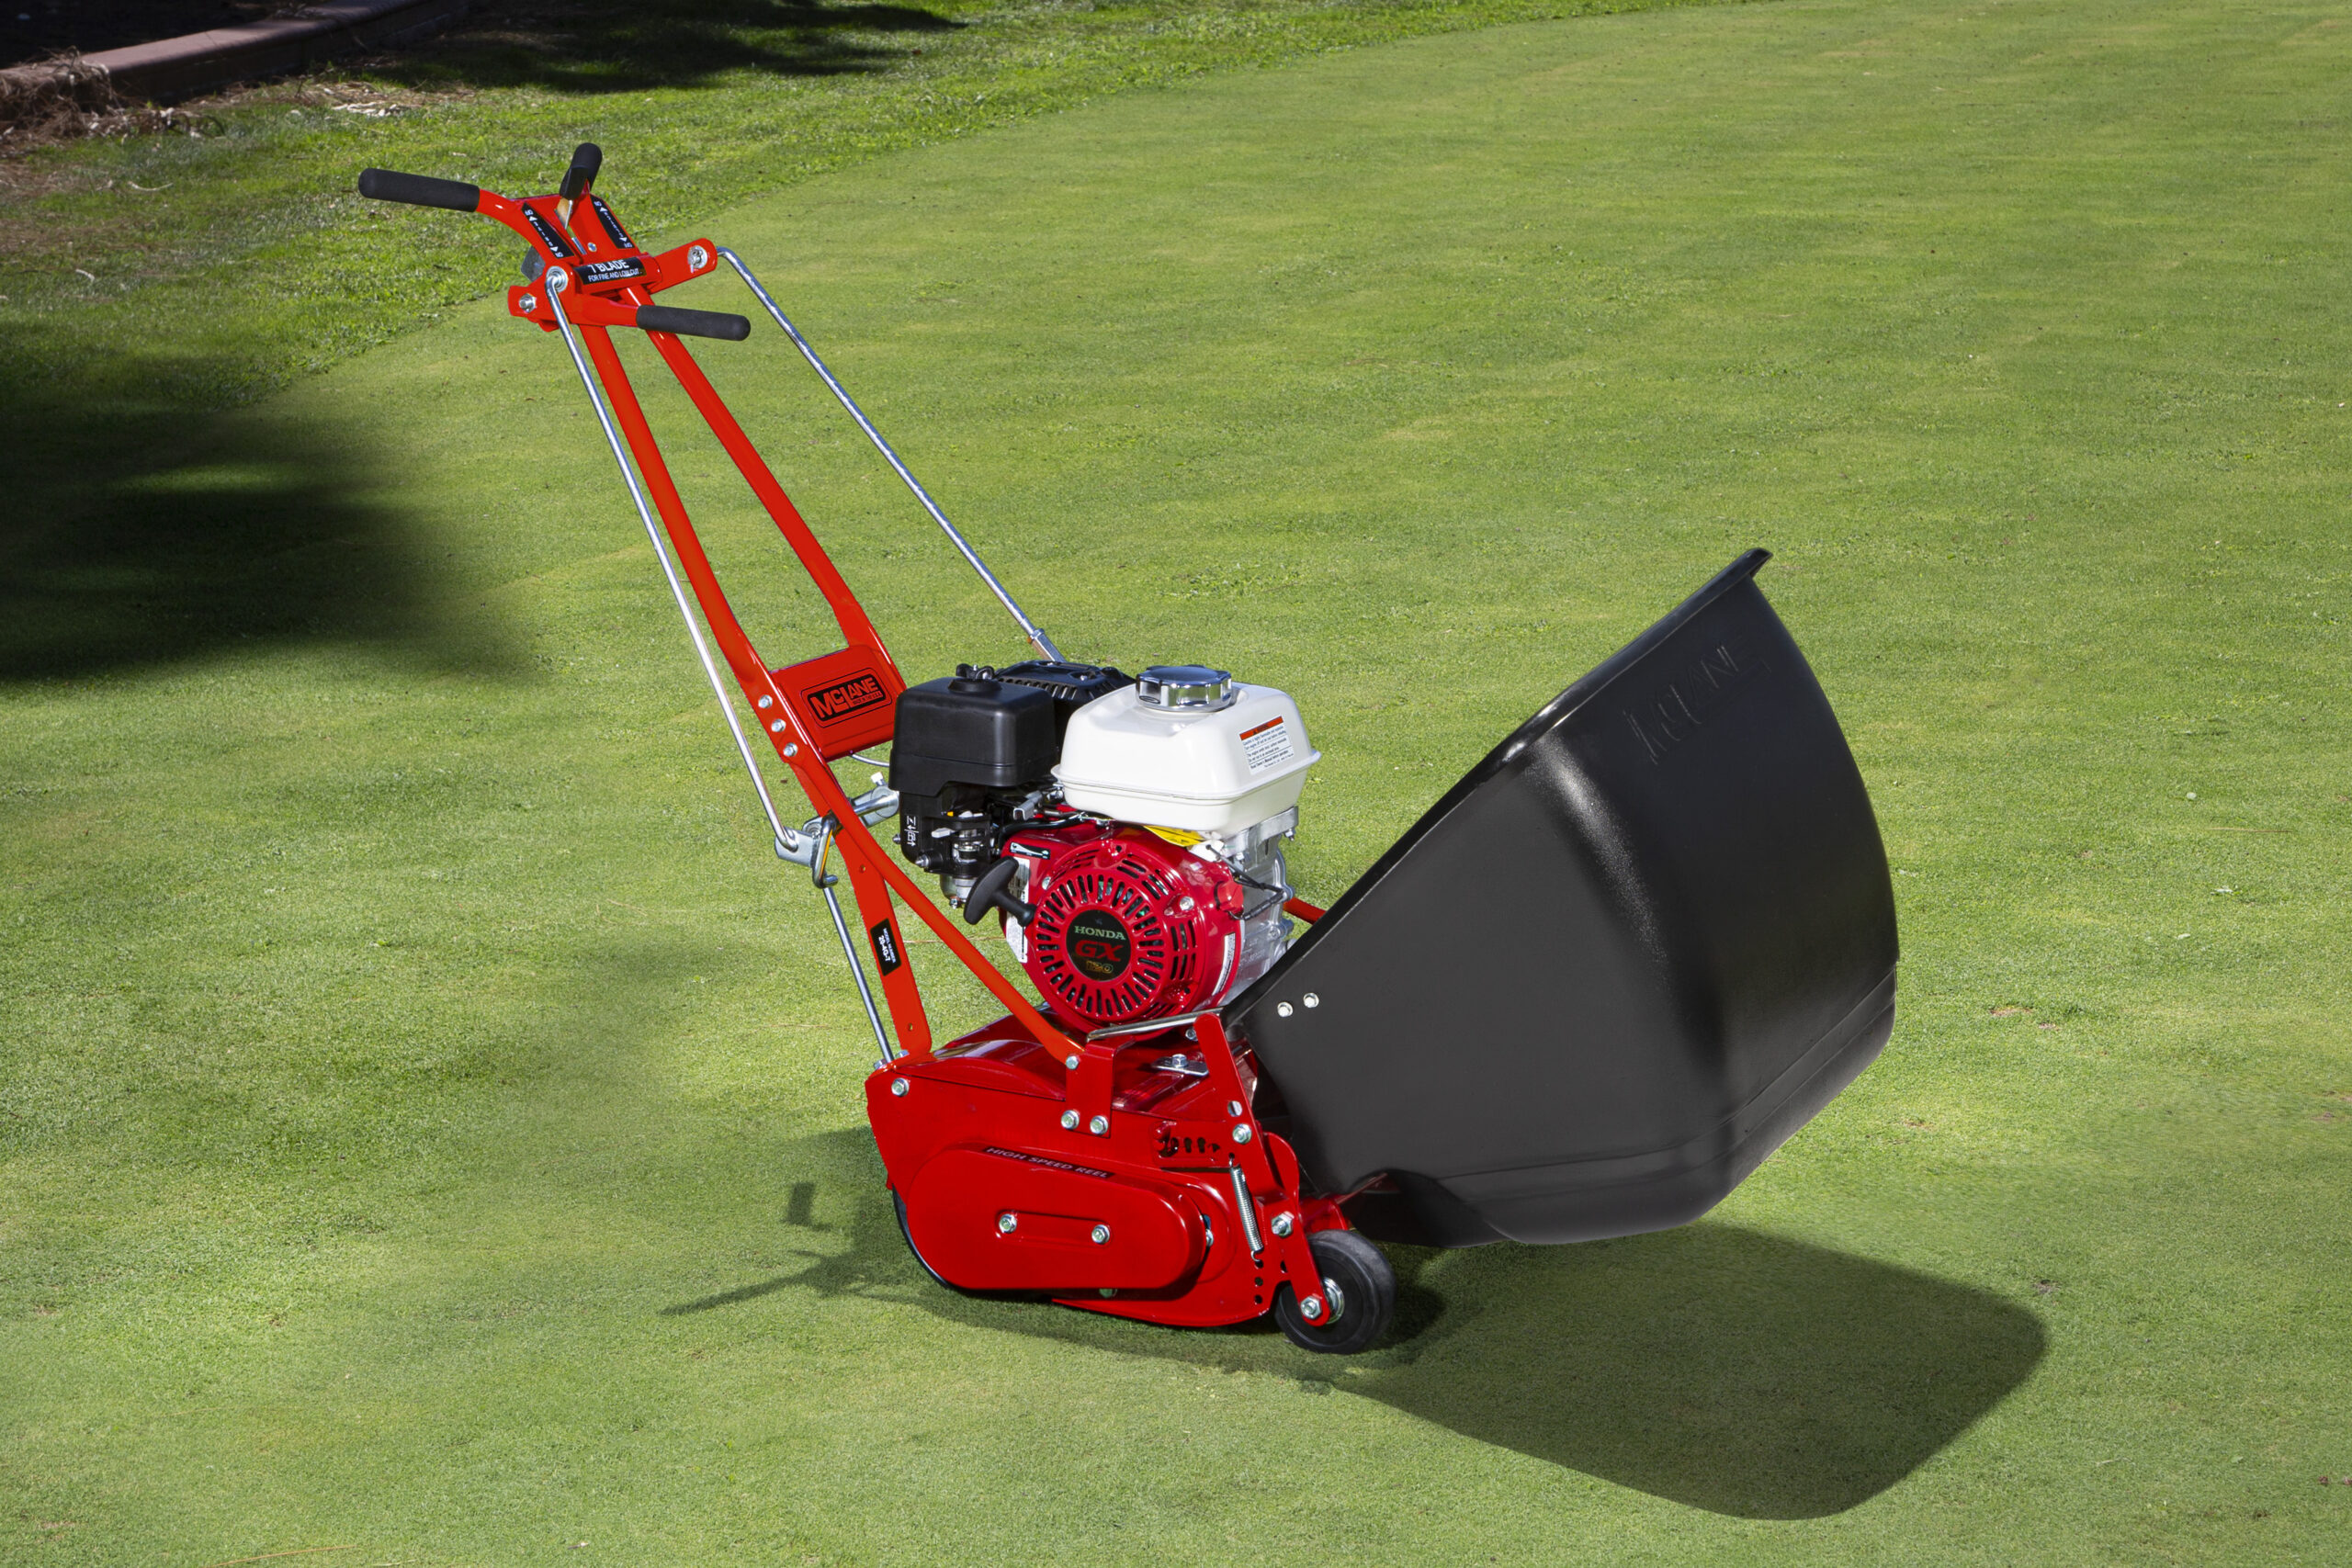 Rare 17” Mclane Push Reel Lawnmower w/ 7 Blade Reel - Lawn Mowers